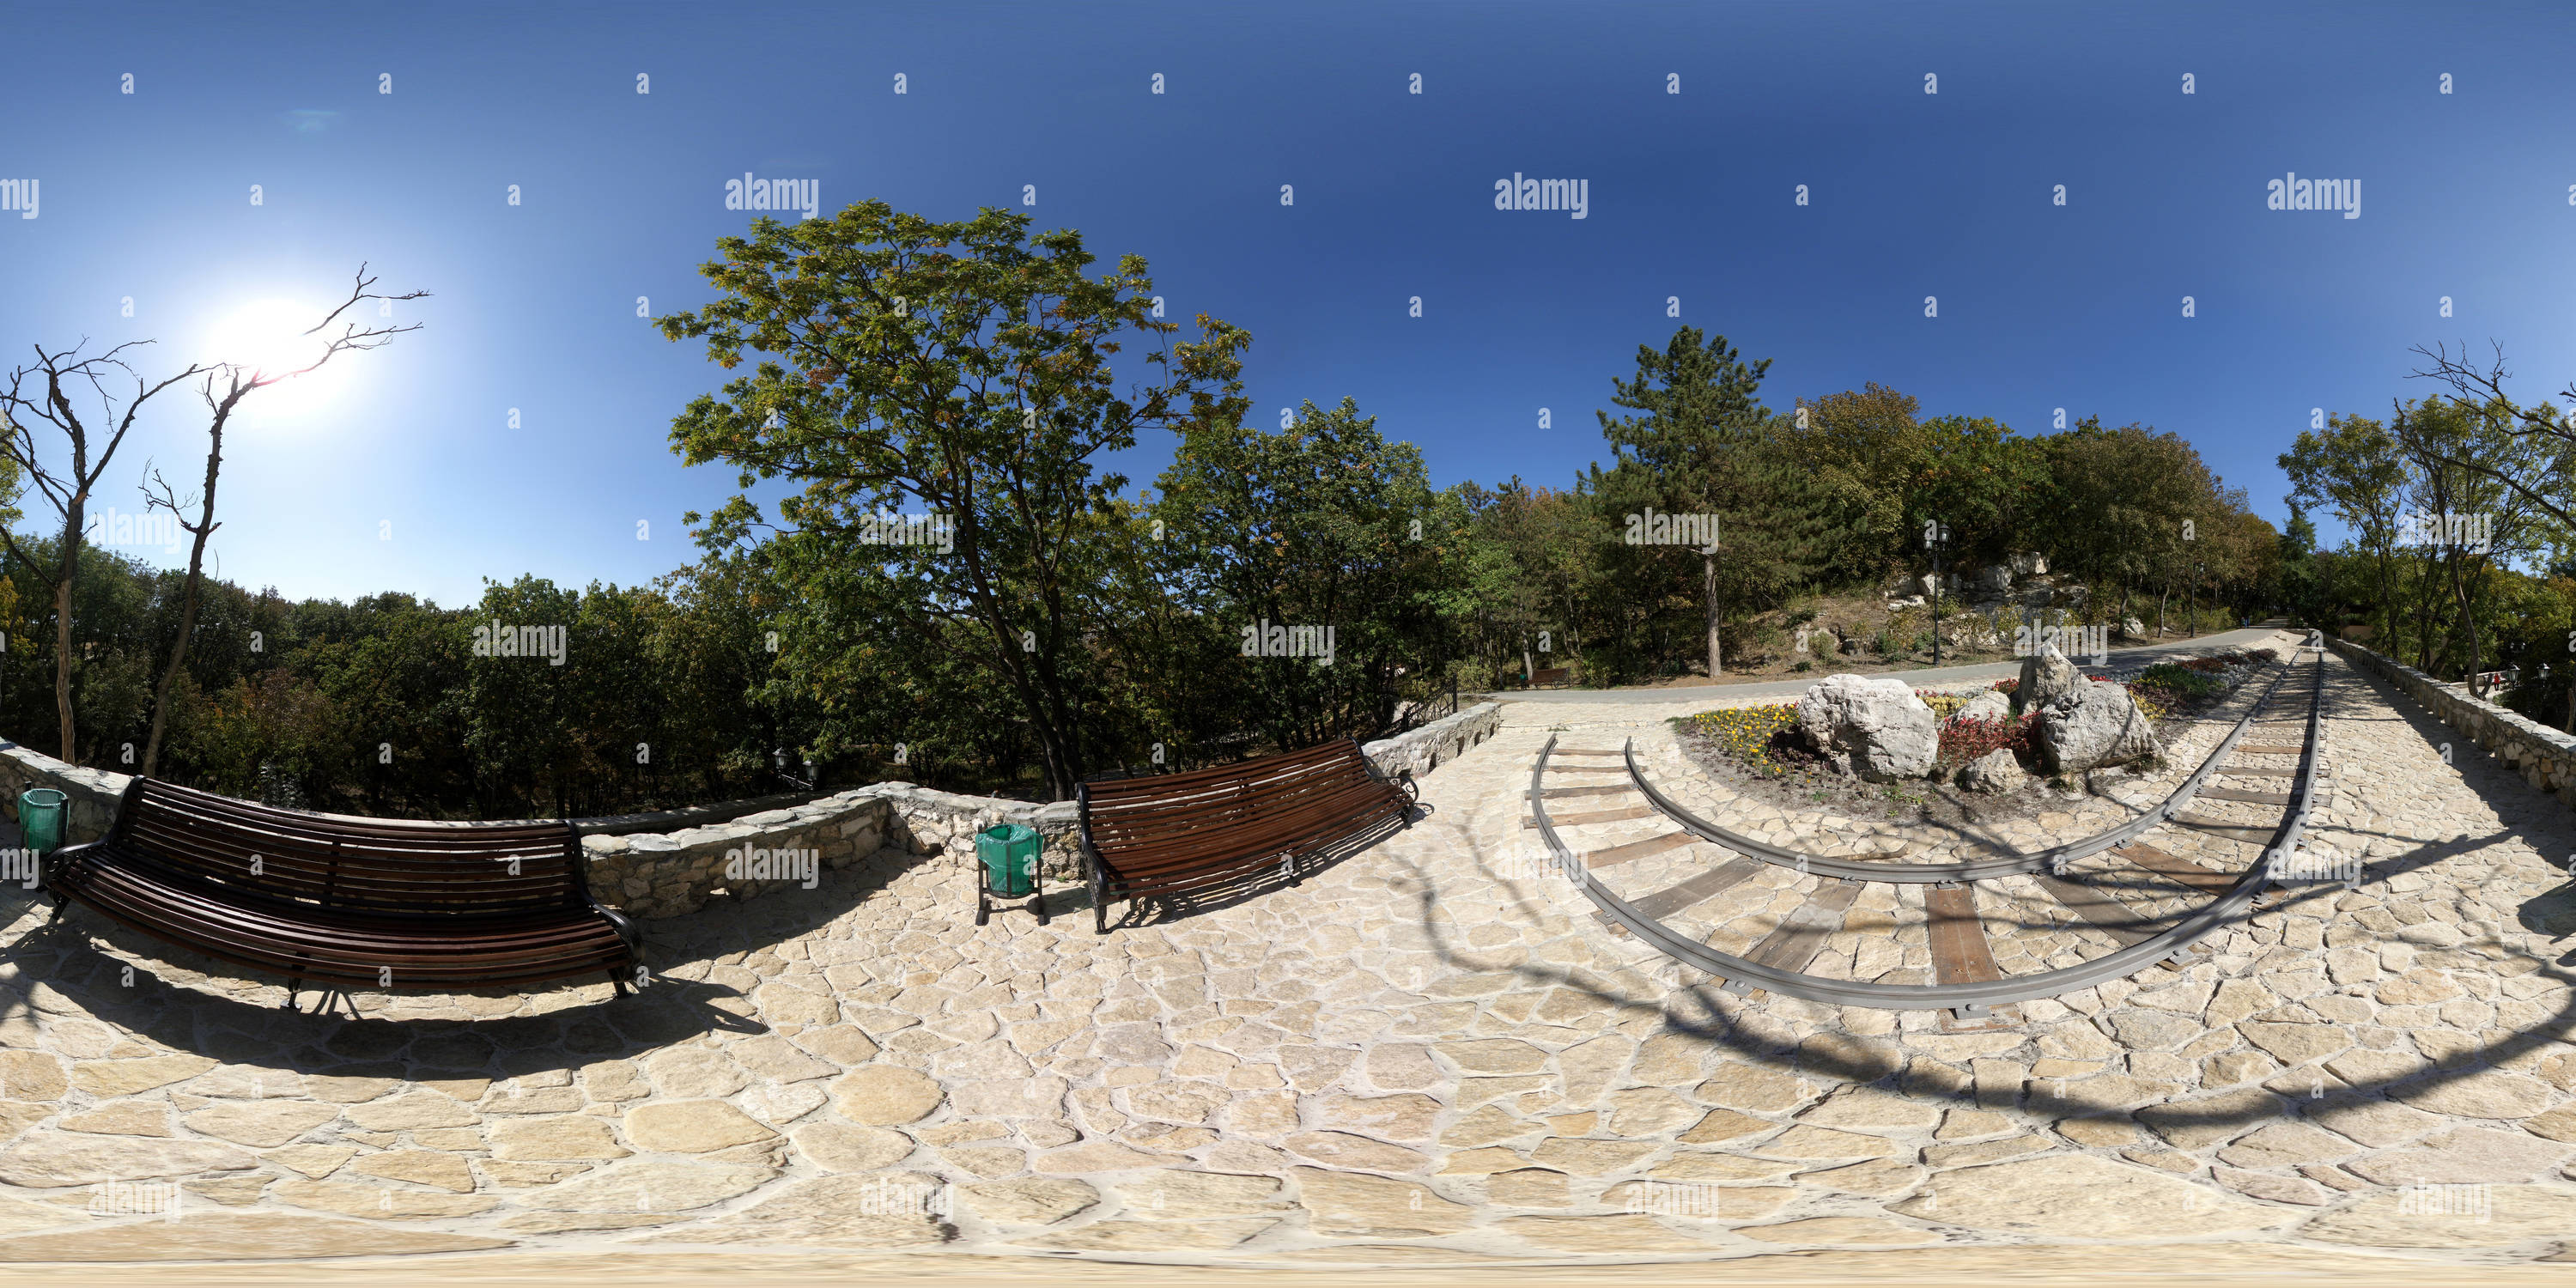 Visualizzazione panoramica a 360 gradi di Парк после реконструкции 2020. Инсталляция Рельсы 2